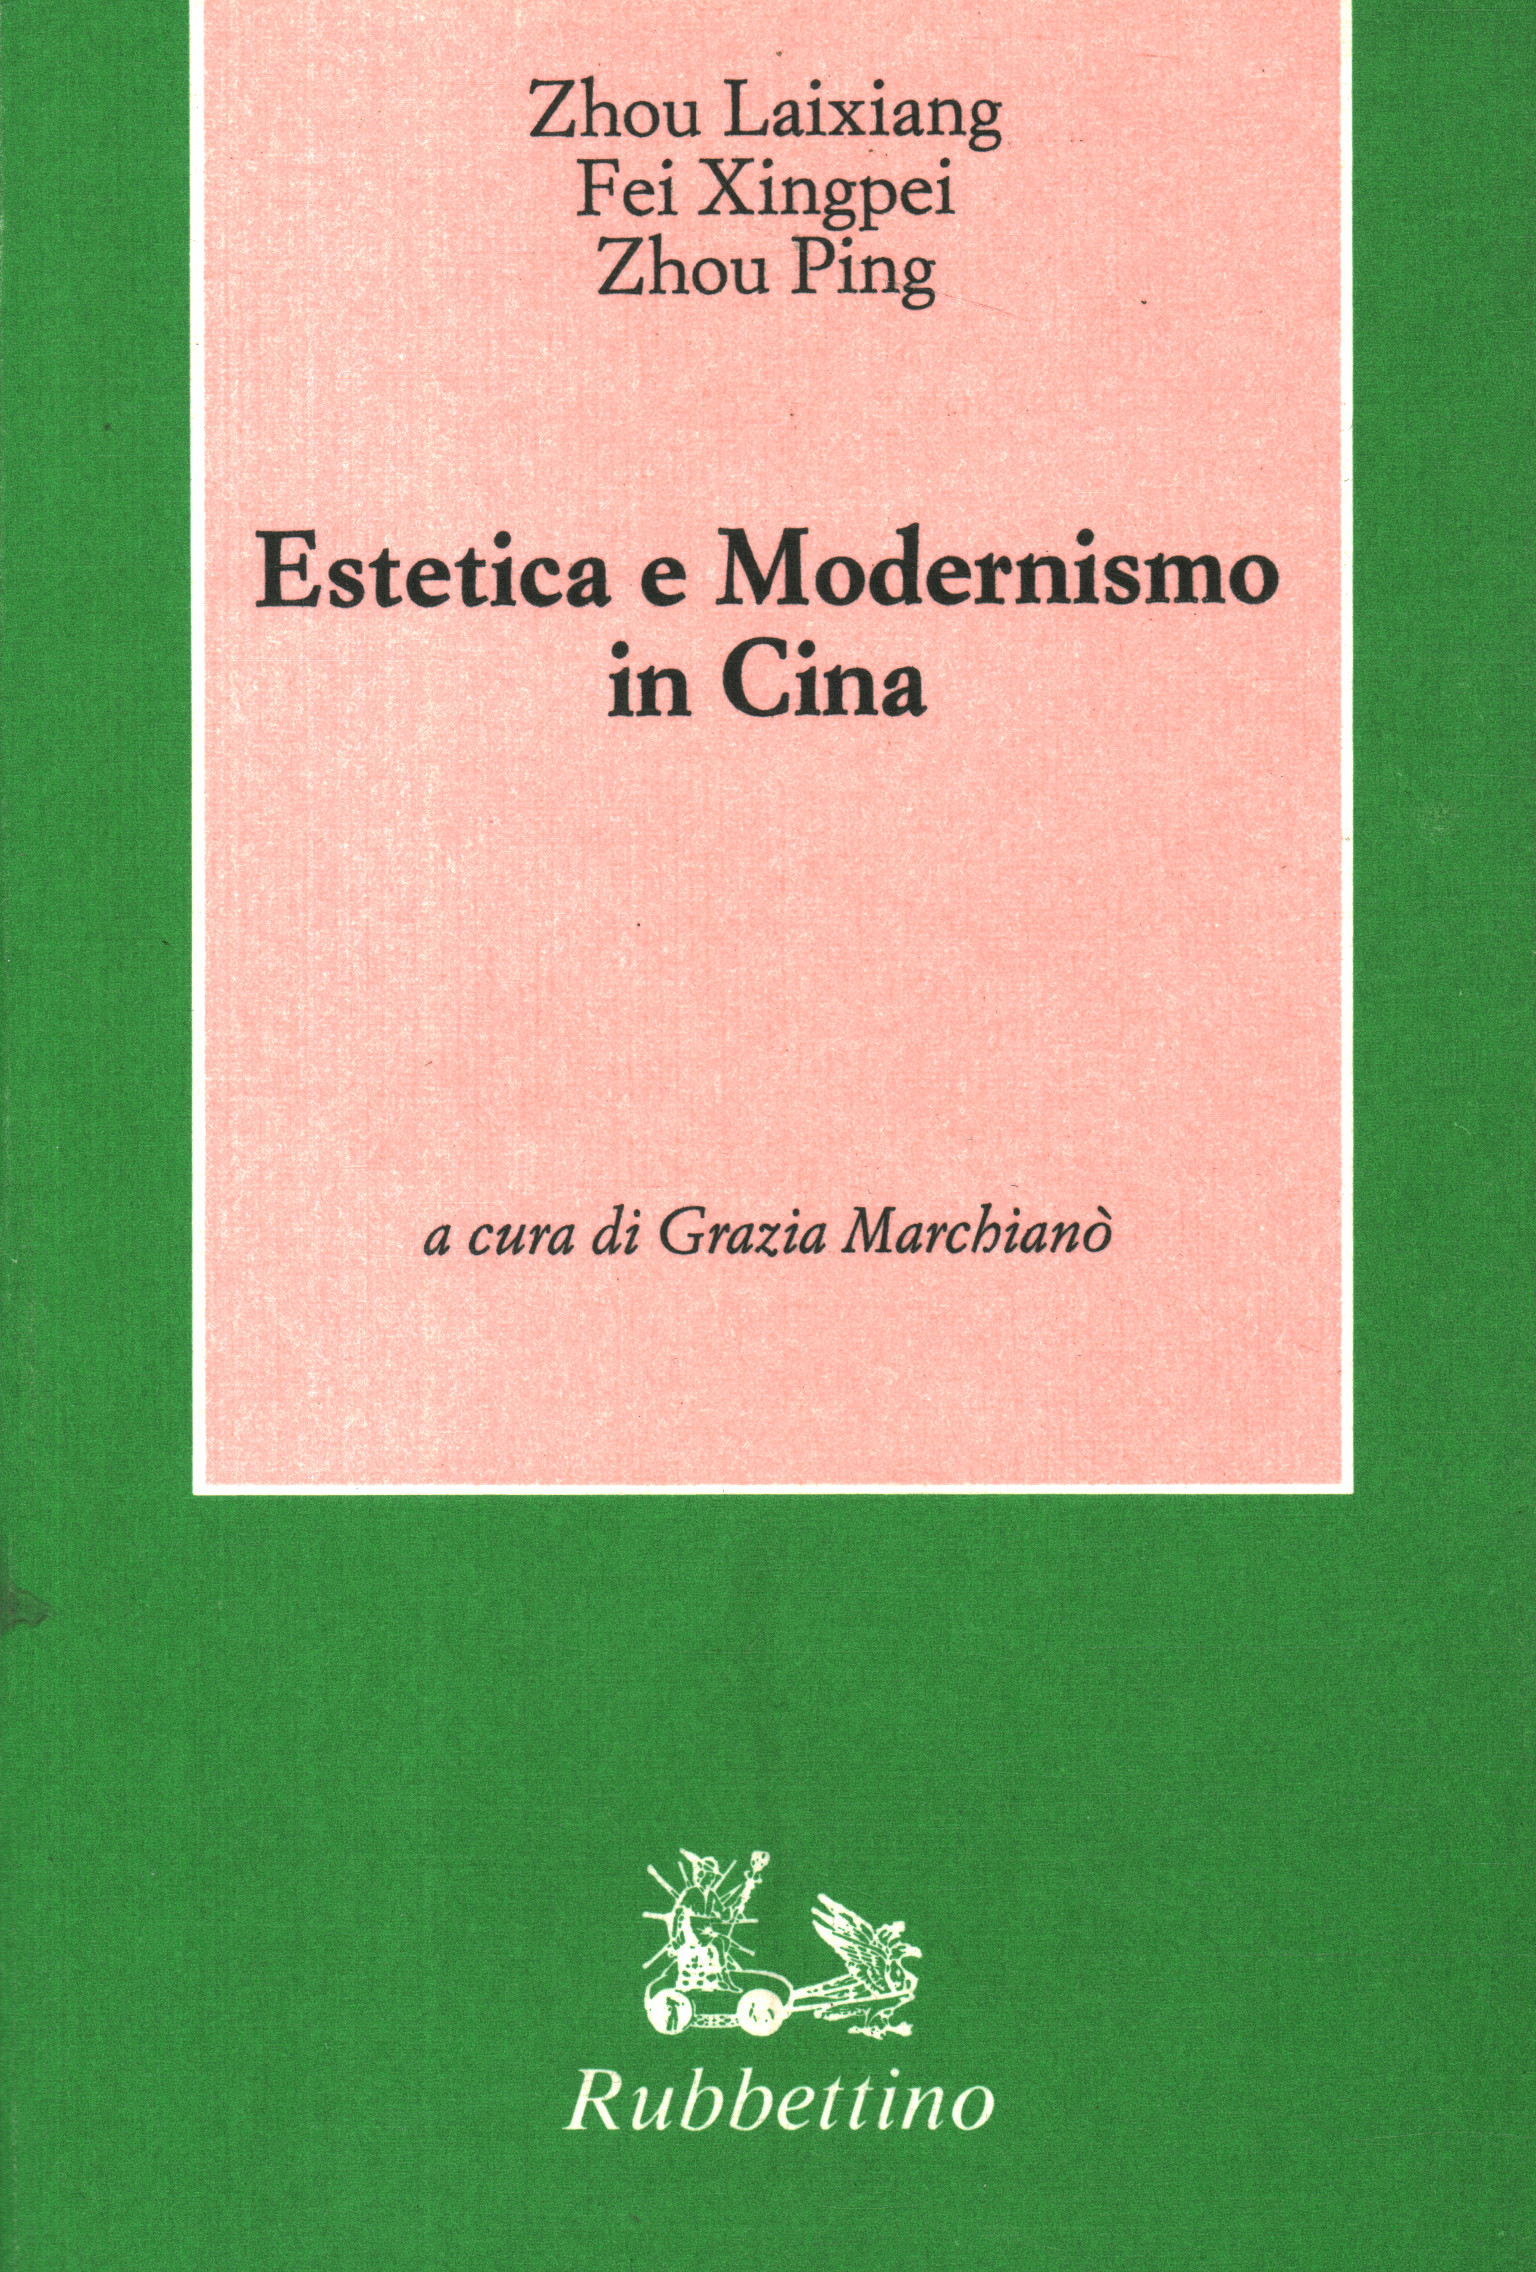 Estetica e Modernismo in Cina